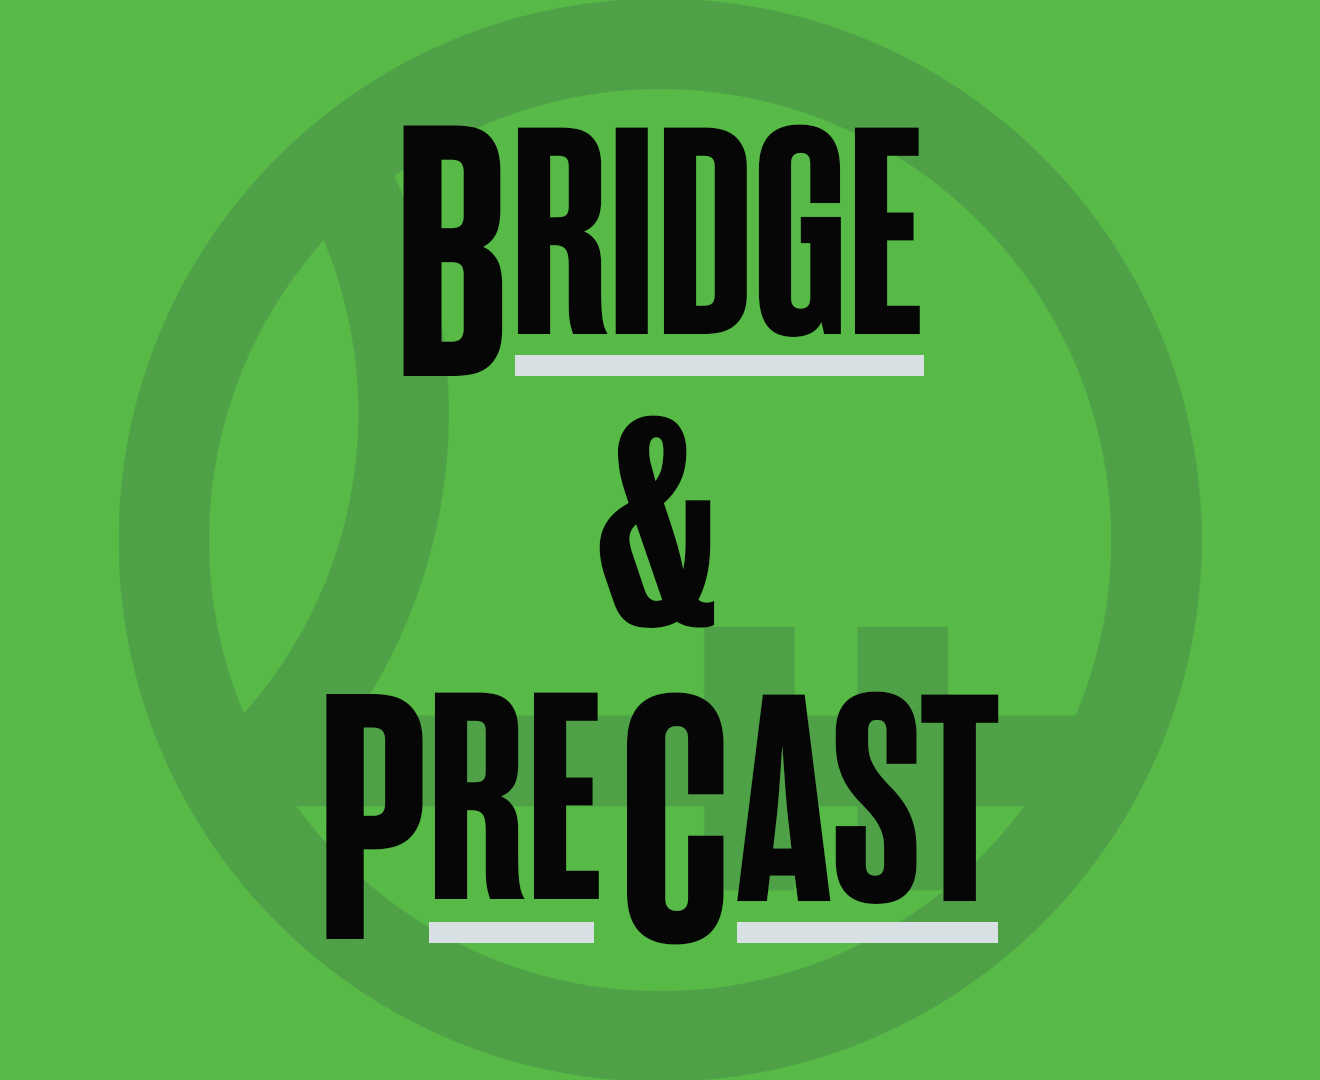 Bridge and PreCast